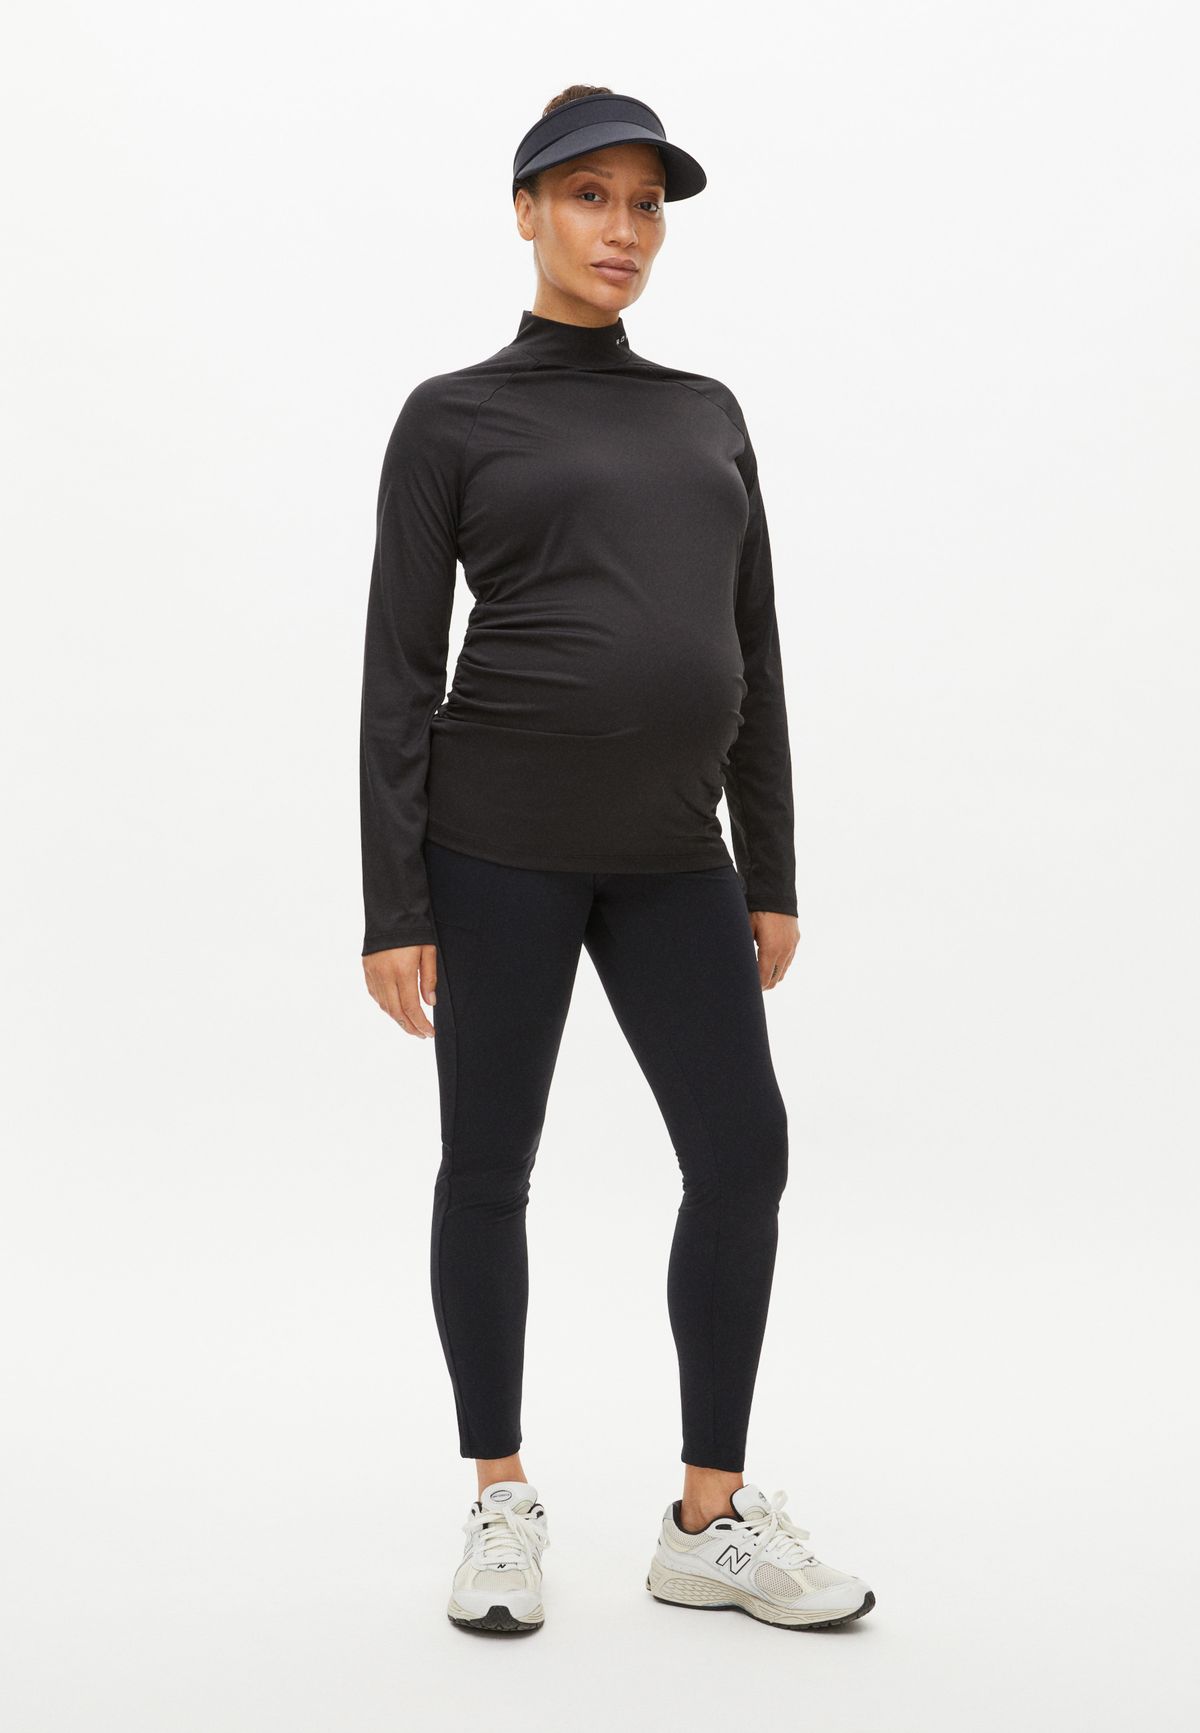 Addison maternity top, Black